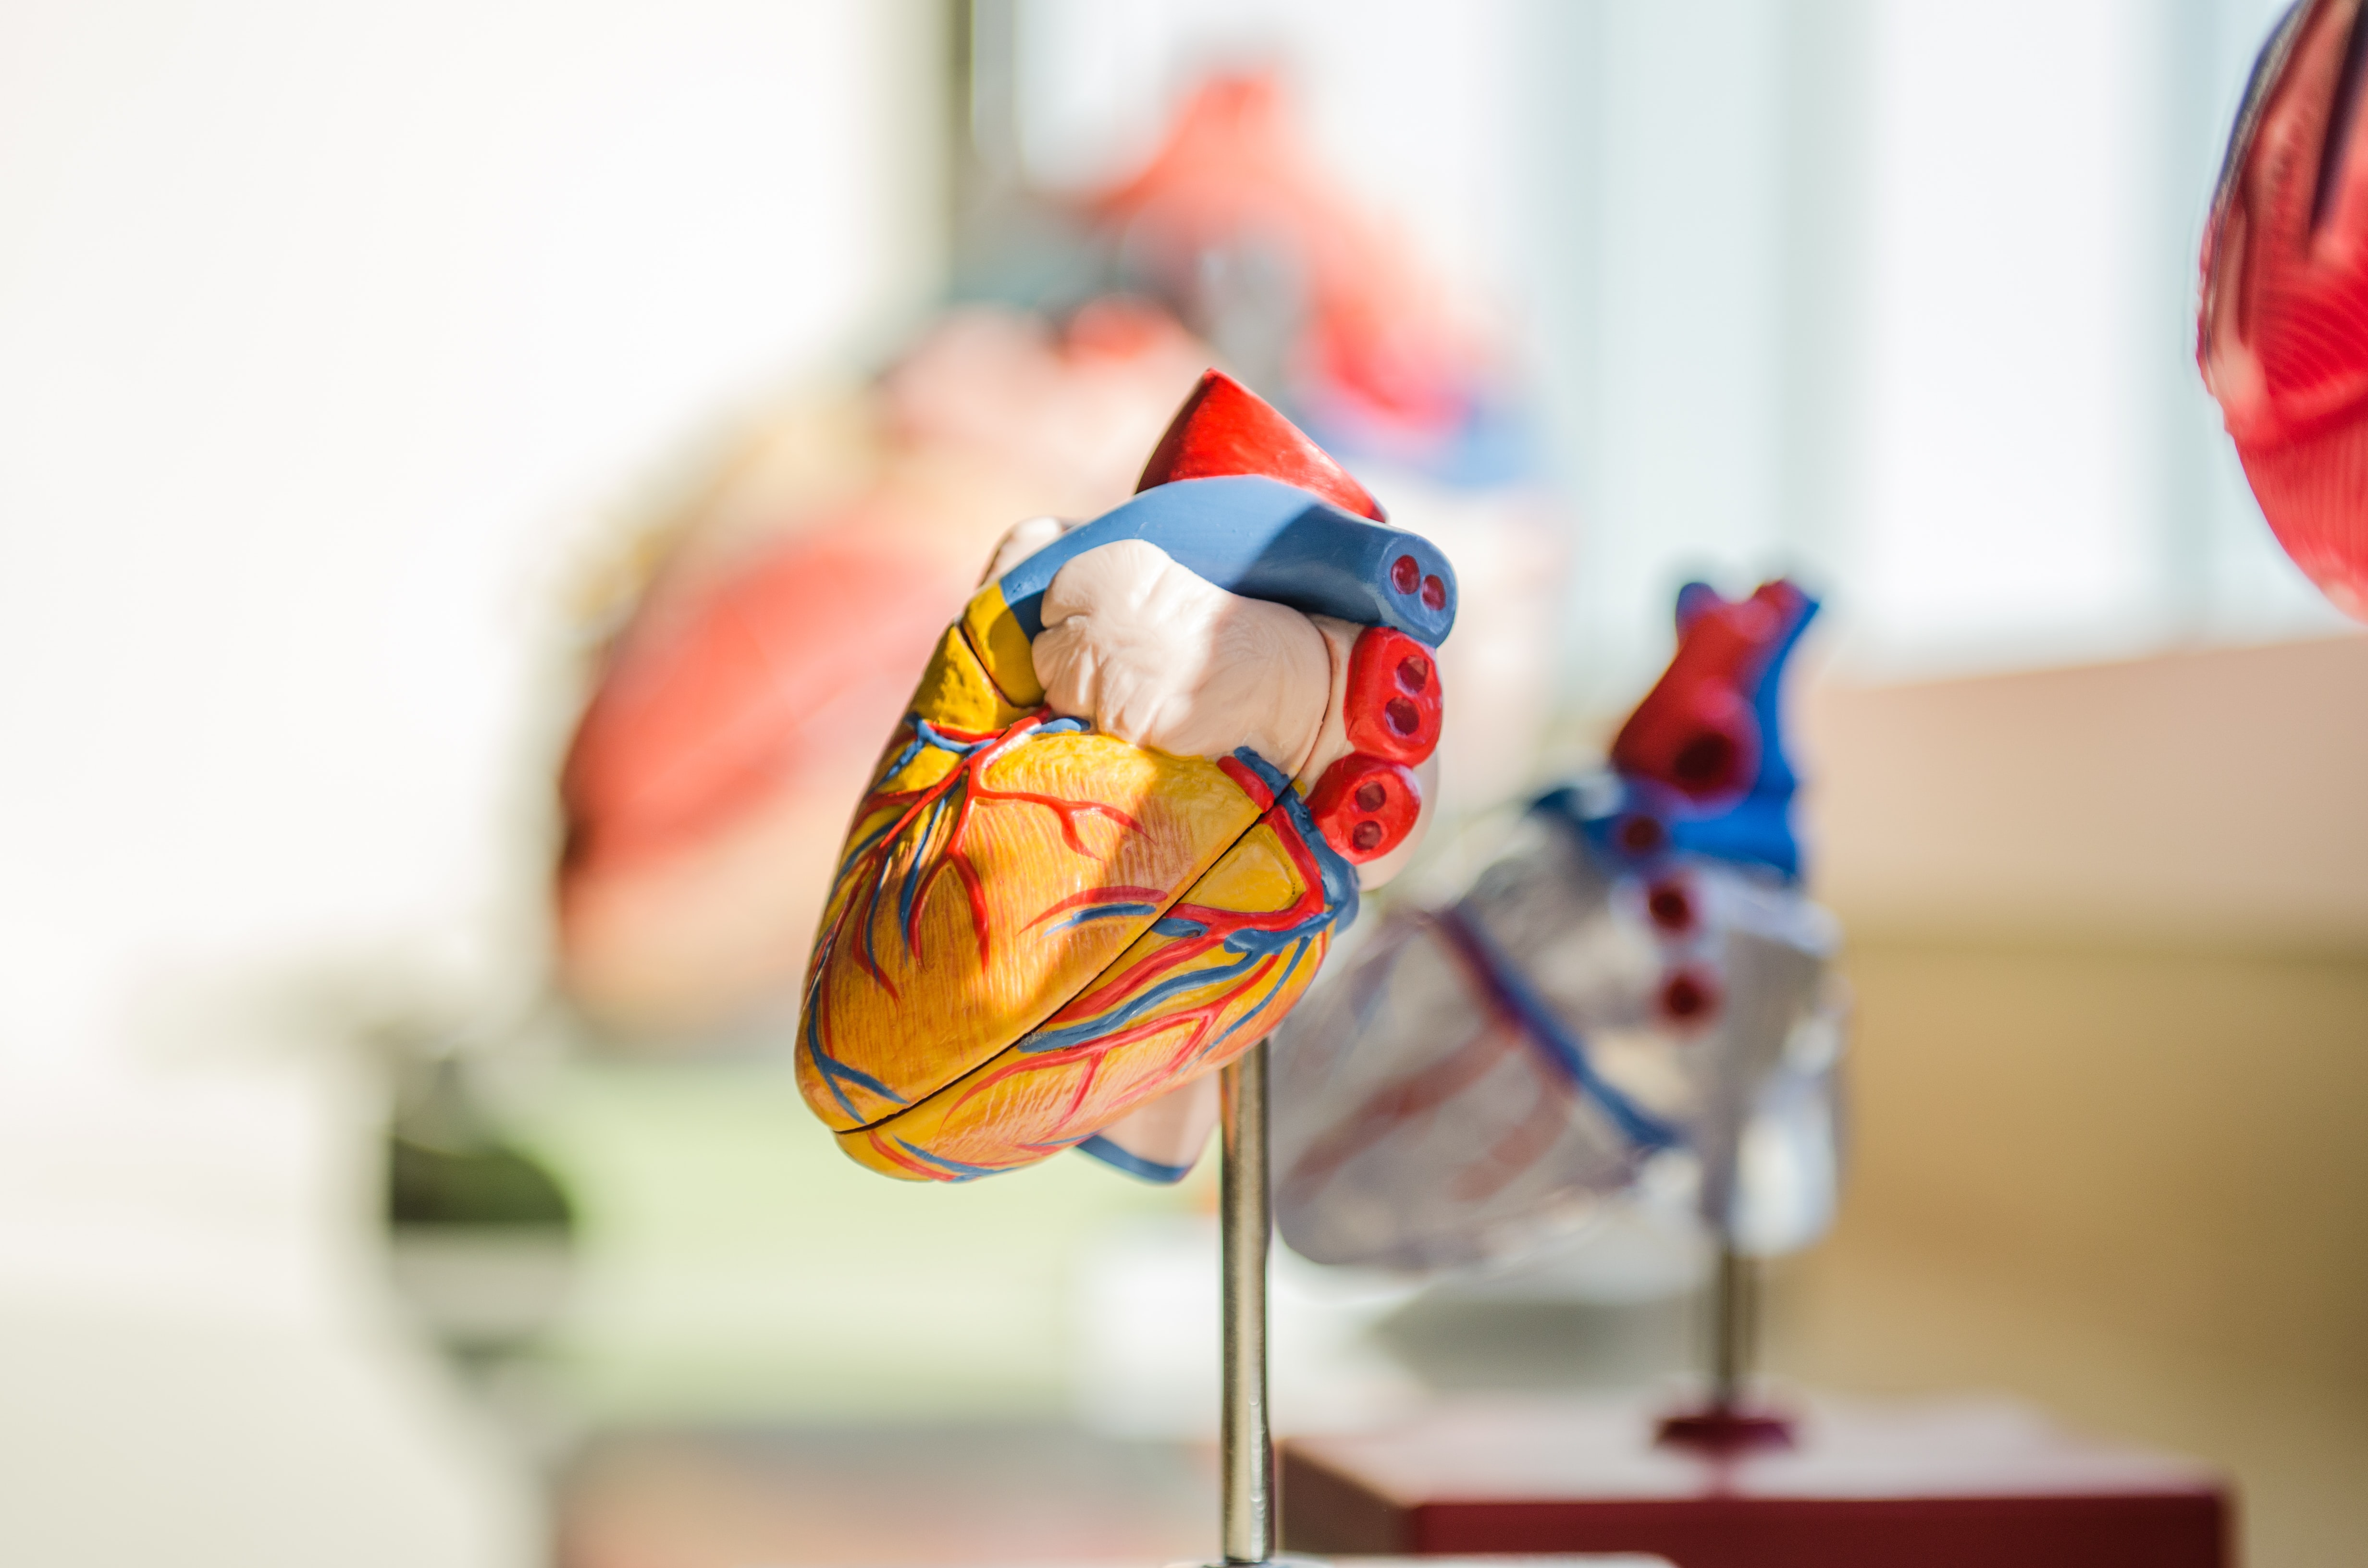 Is heart valve disease dangerous?